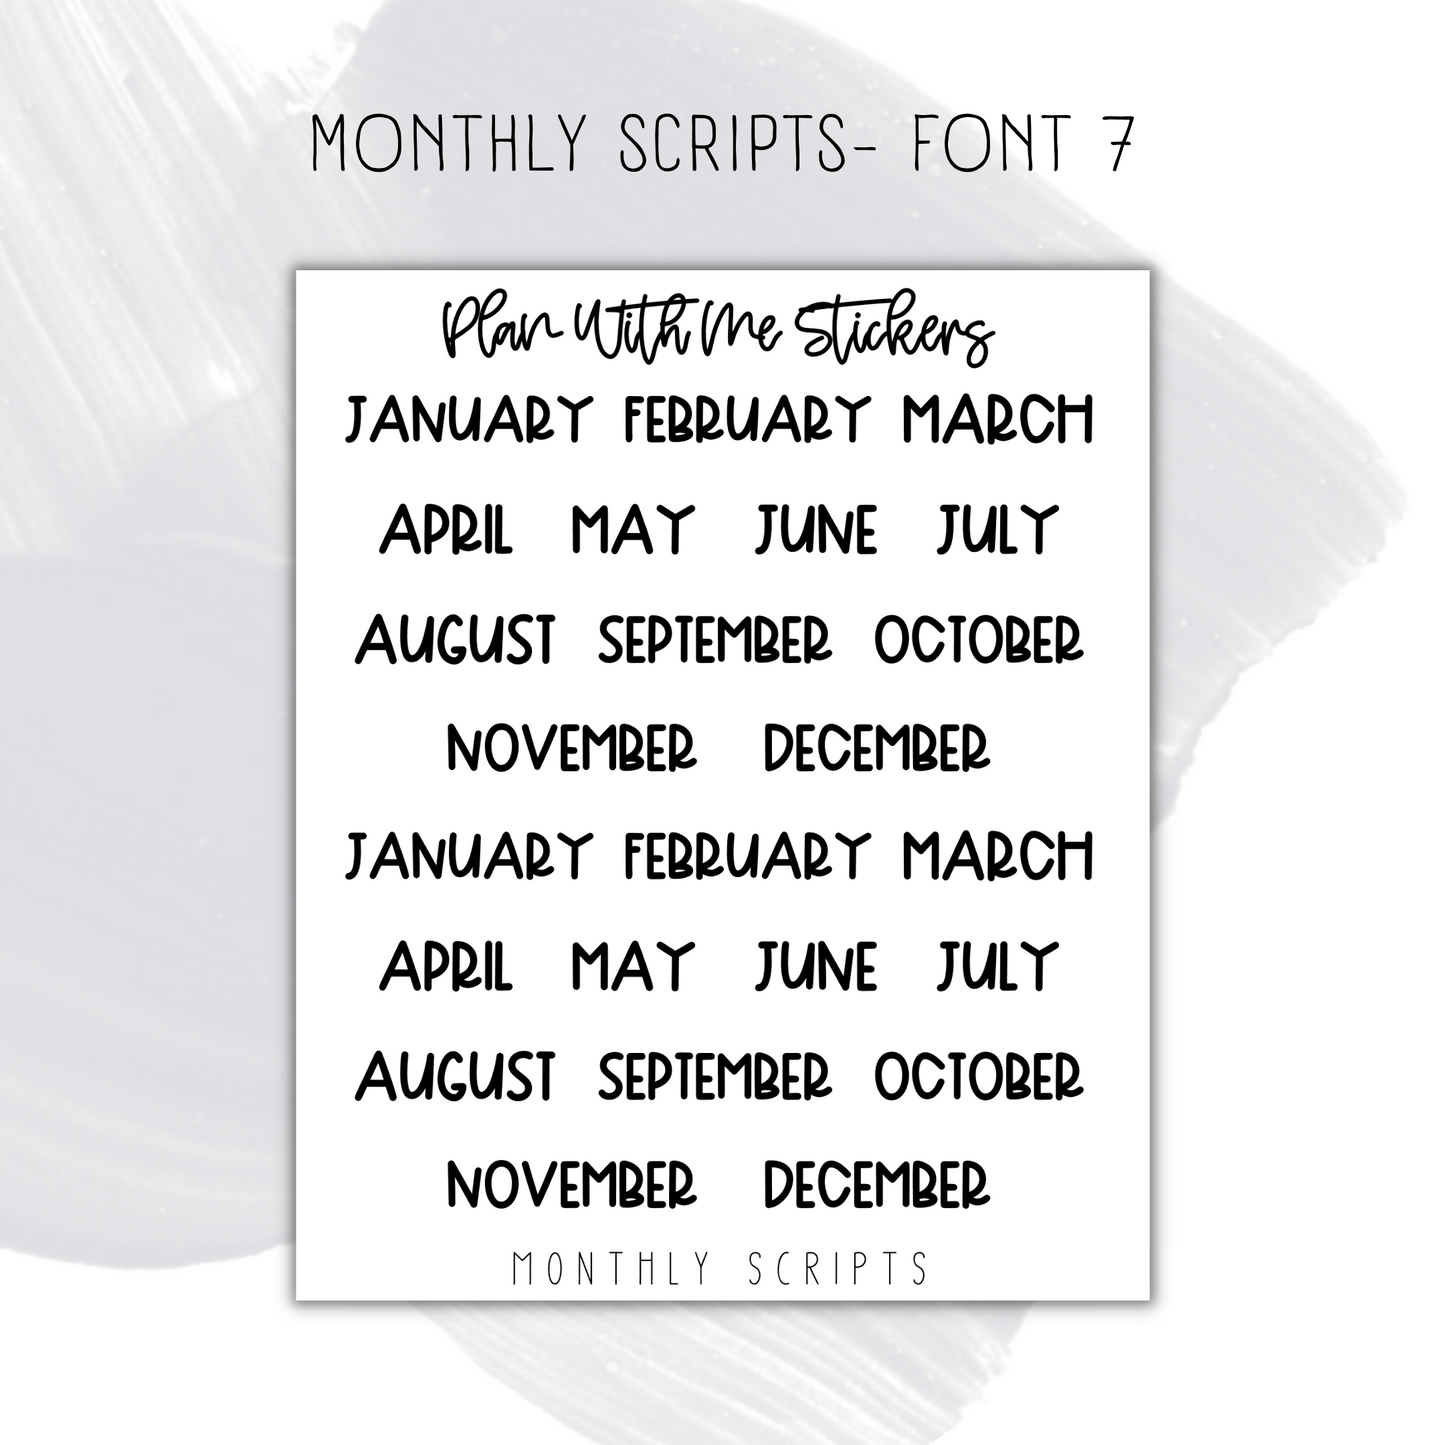 Monthly Script- Font 7